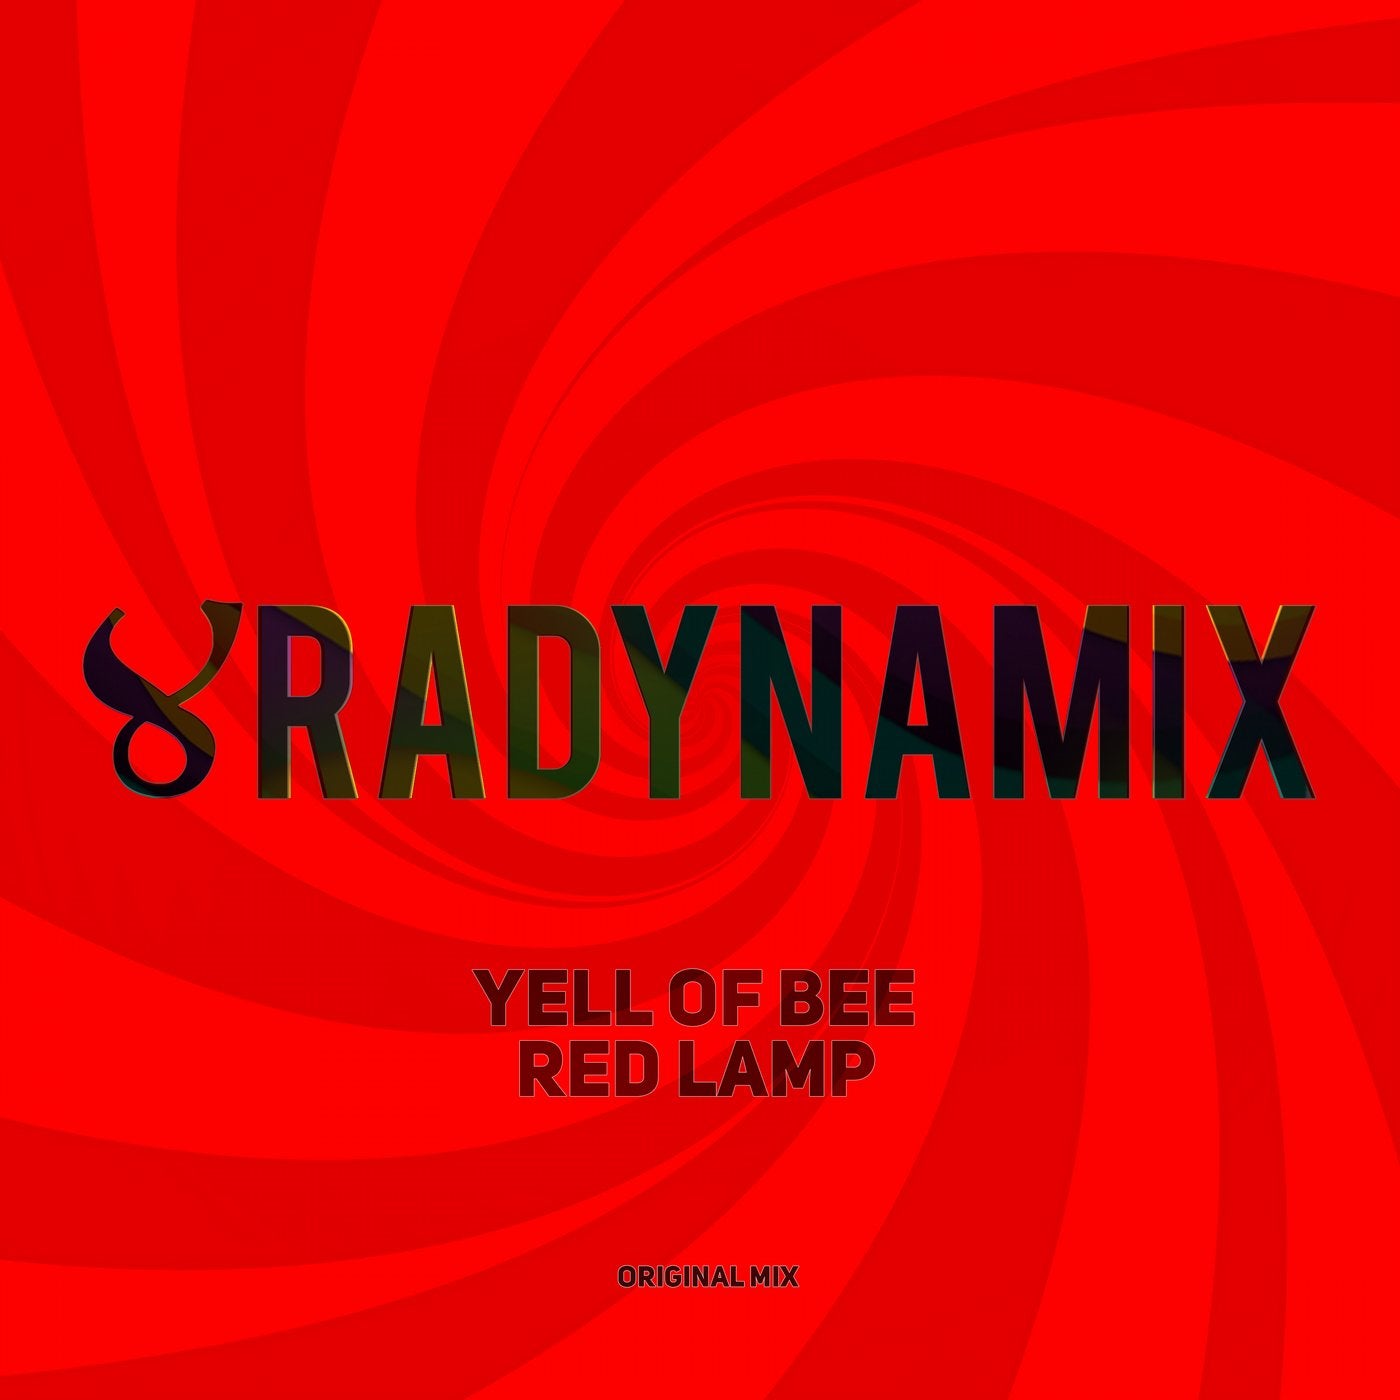 Redlamp